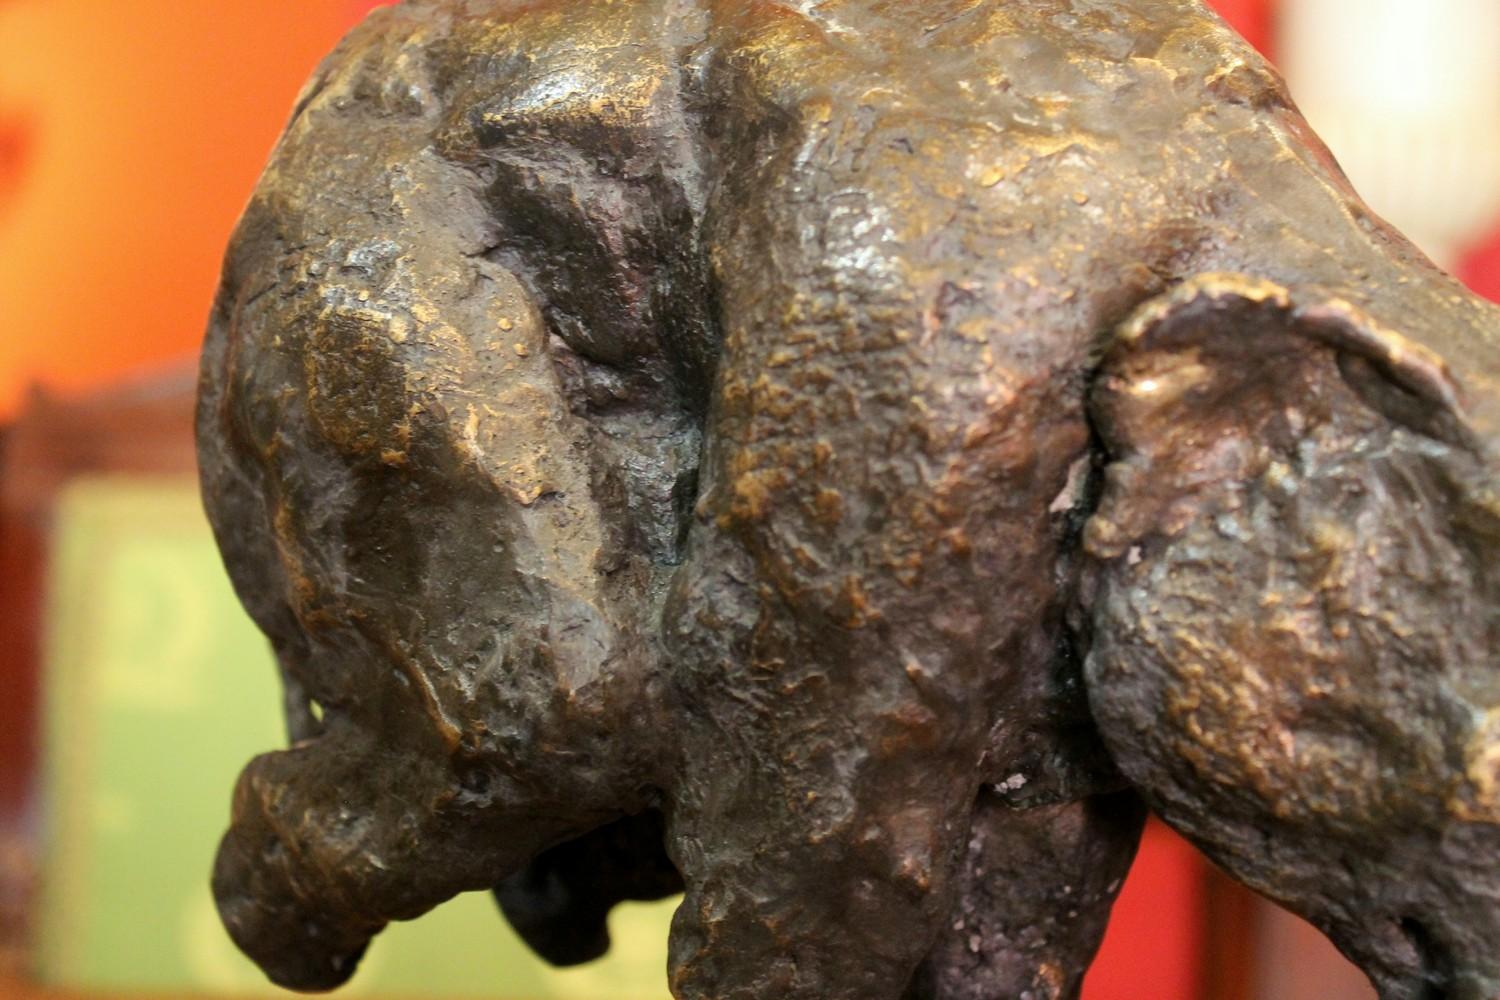 Elephant on Iron Pedestal, Lost Wax Casting Parcel-Gilt Patina Bronze Sculpture For Sale 10